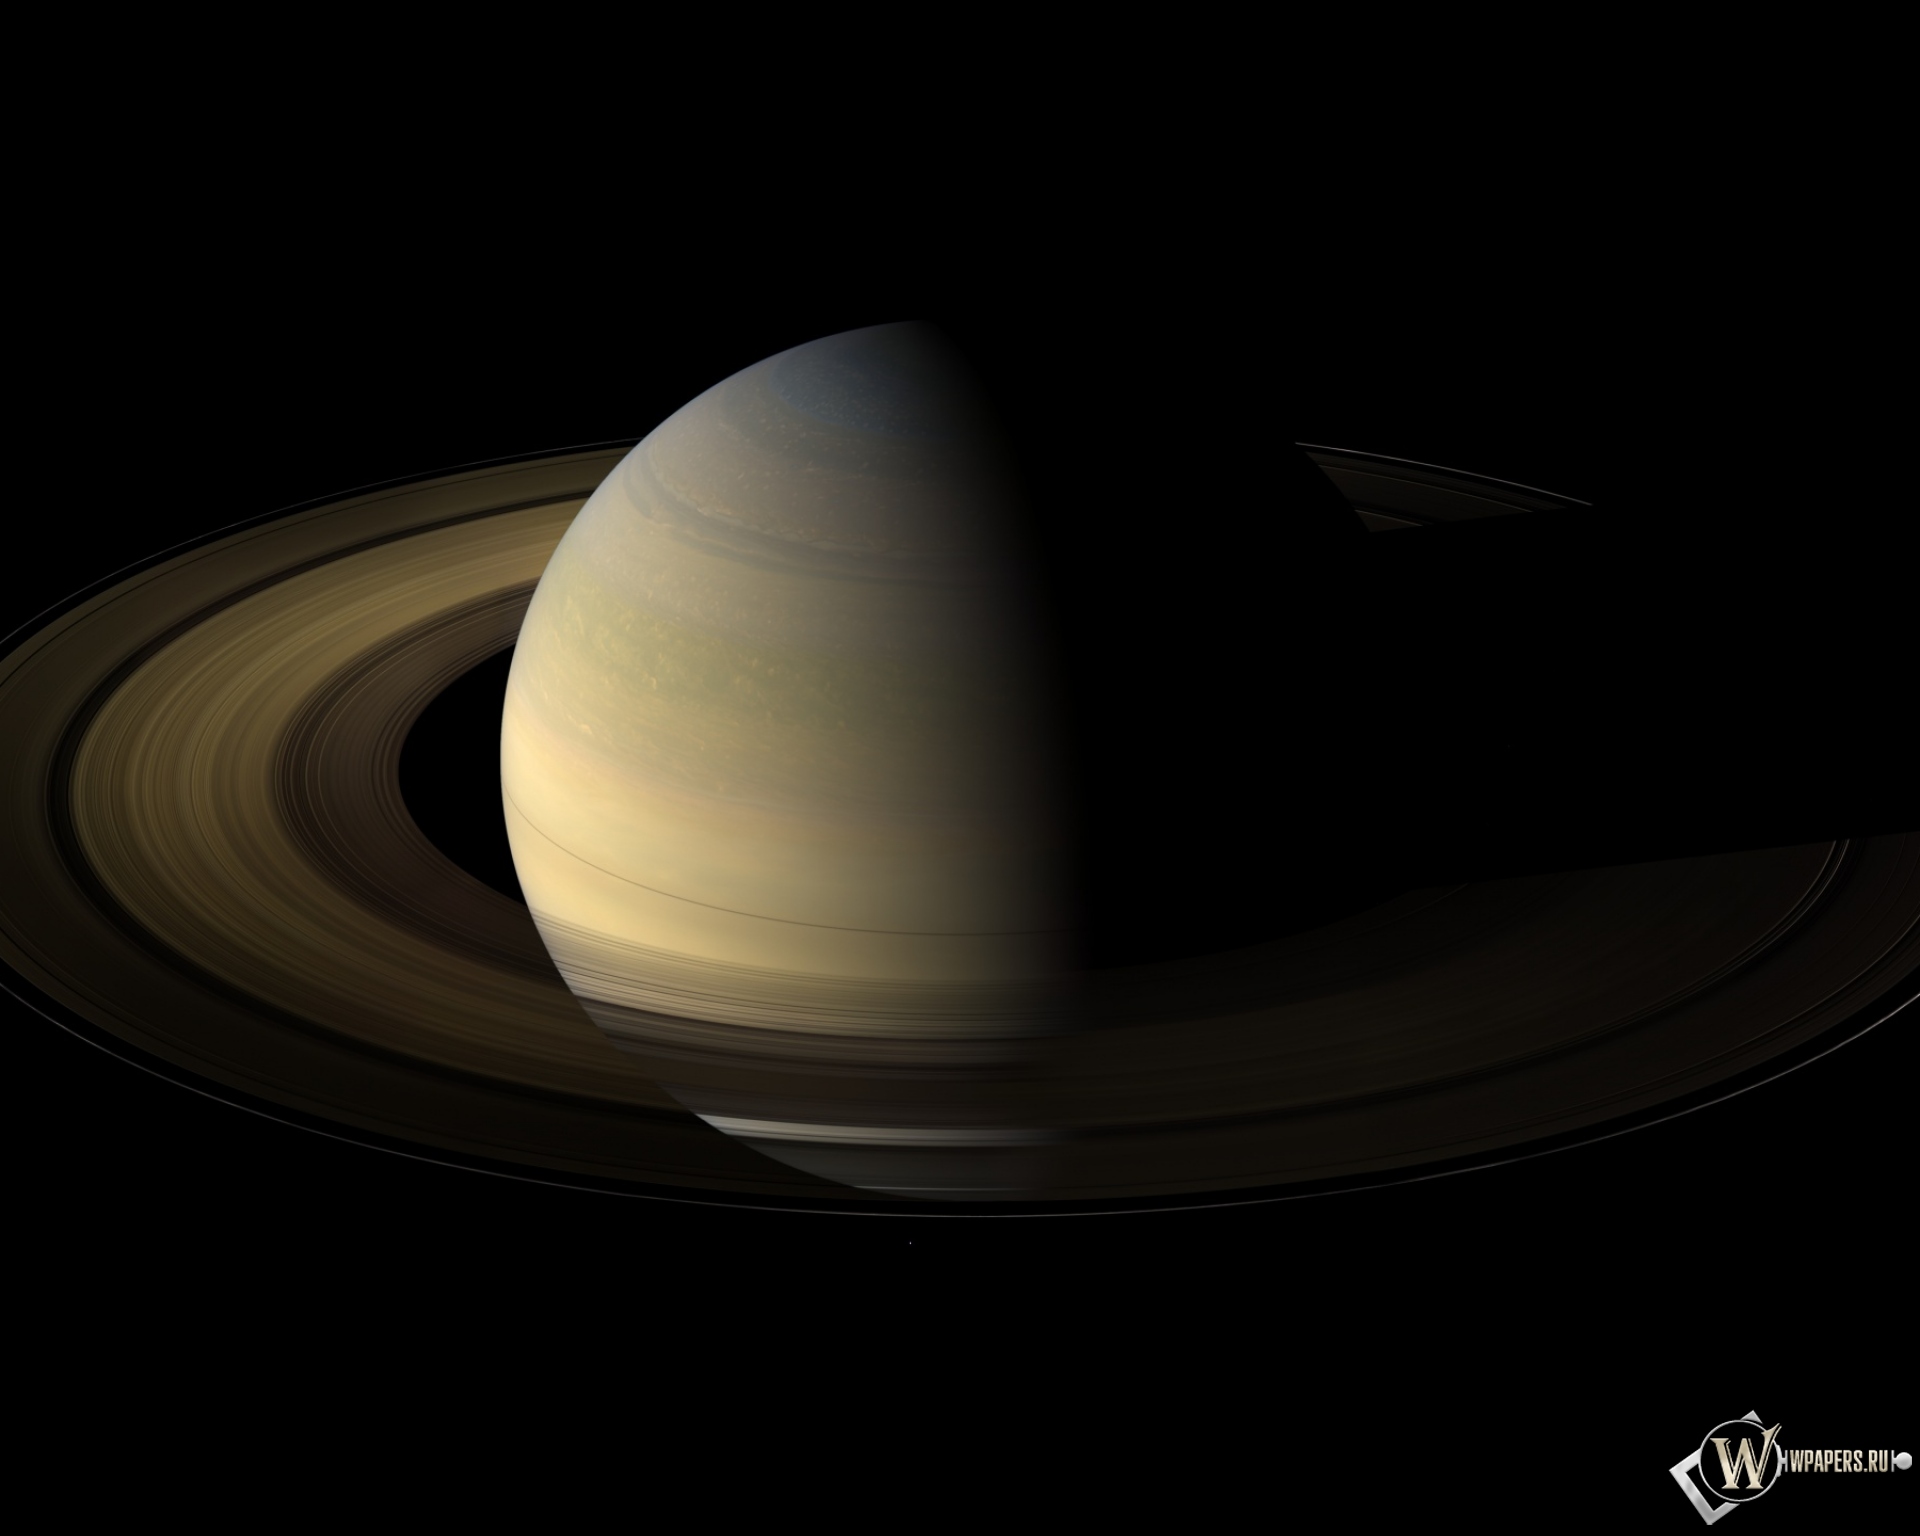 Кольца Сатурна 1920x1536